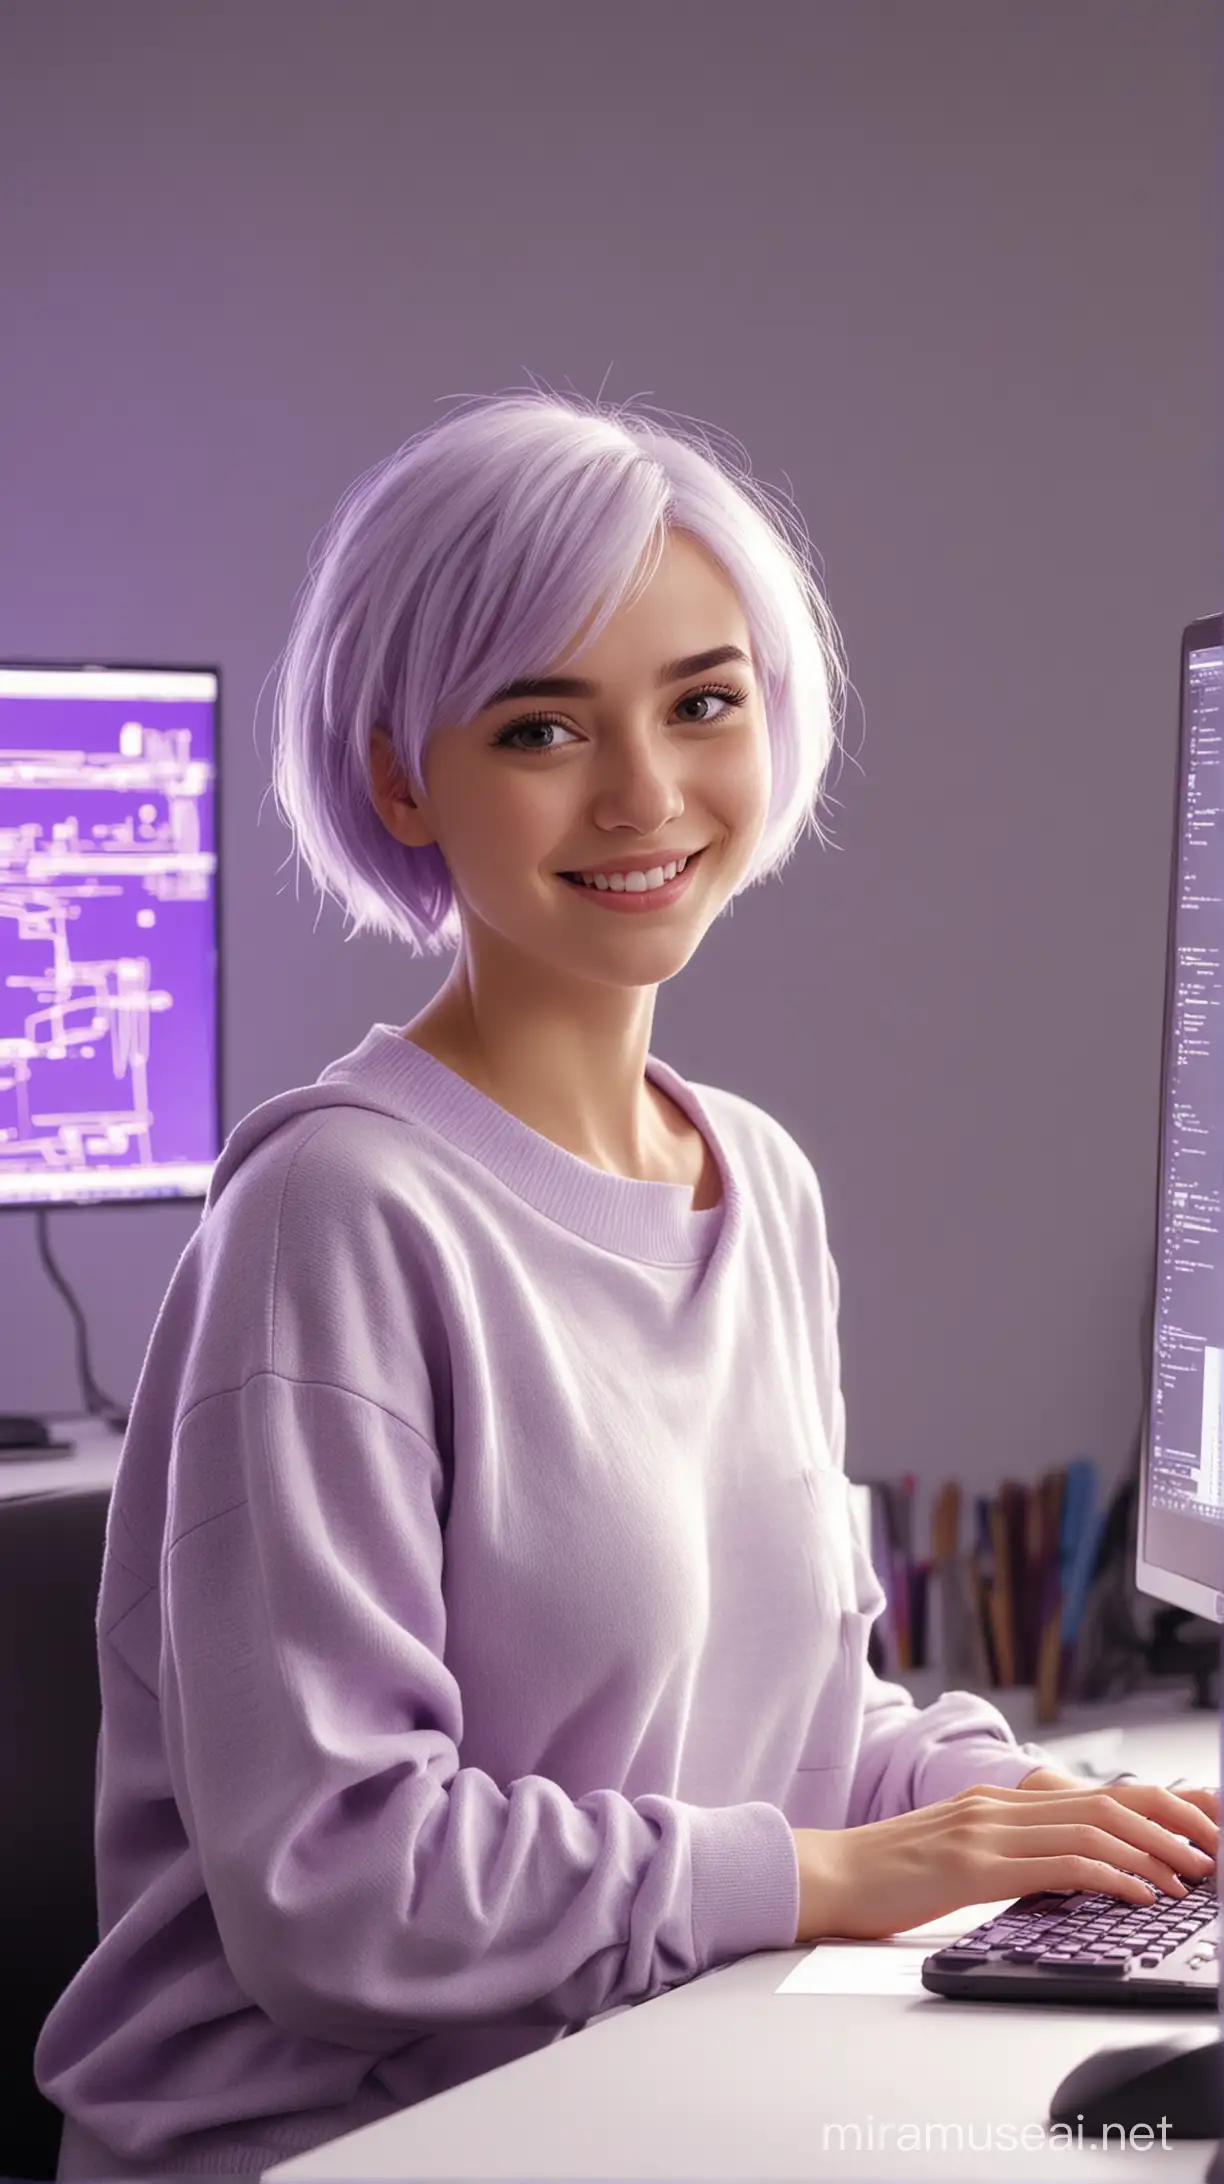 Joyful Girl with Purple Lights Creating Art on Graphics Tablet in Animation Studio